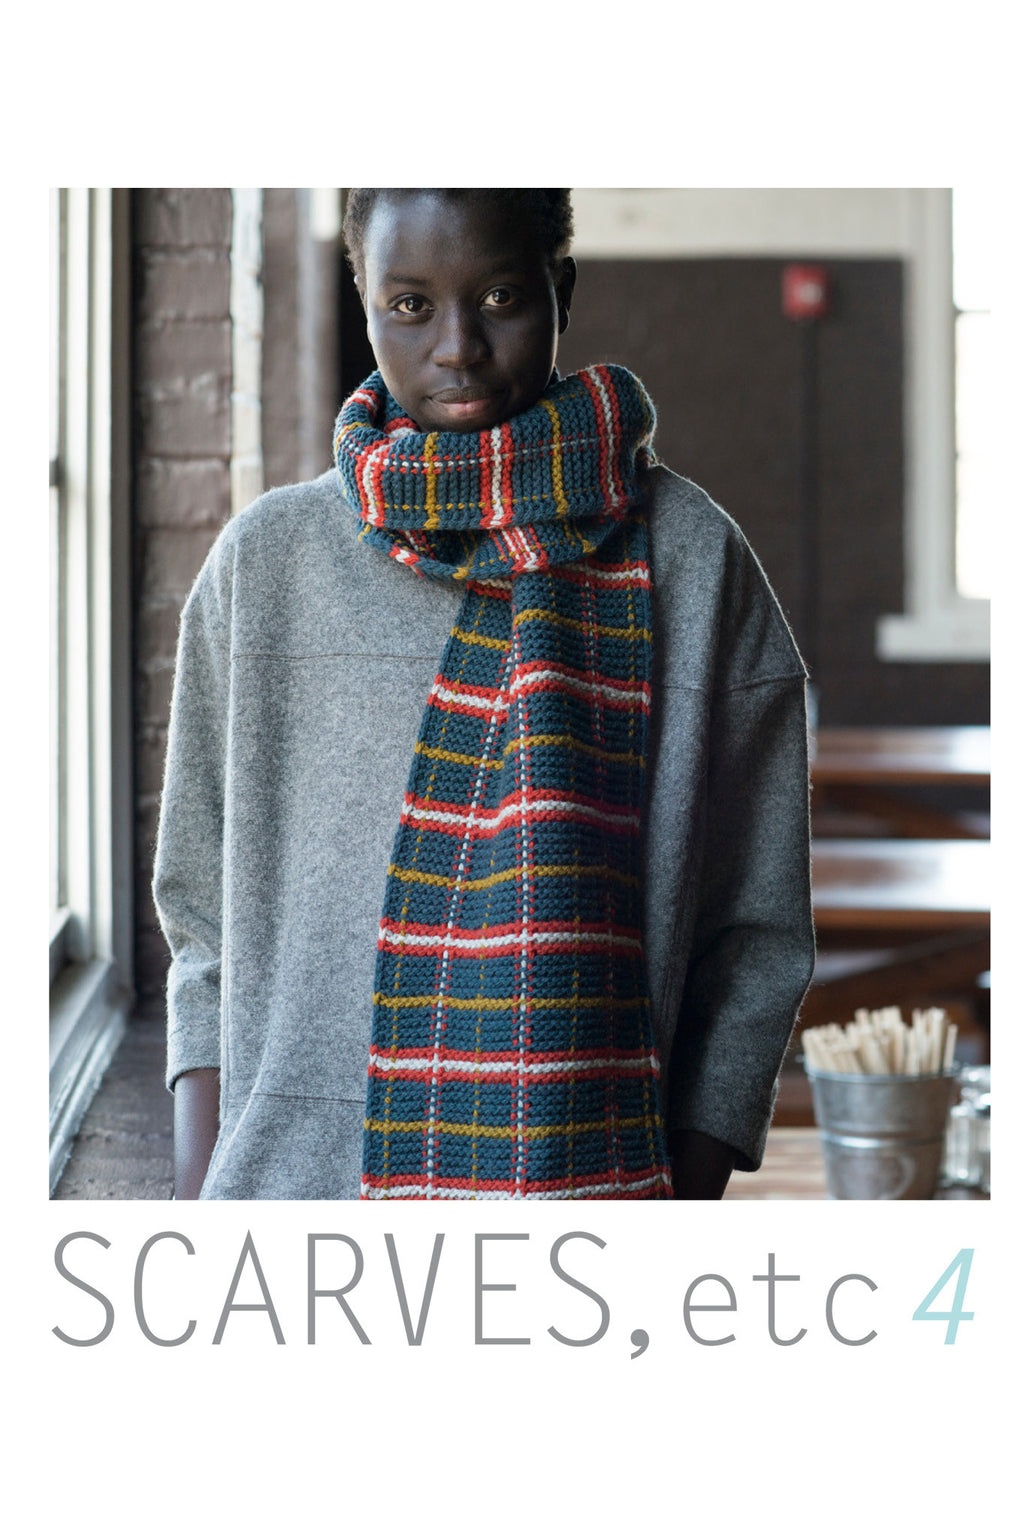 scarves, etc 4 – Quince & Co.